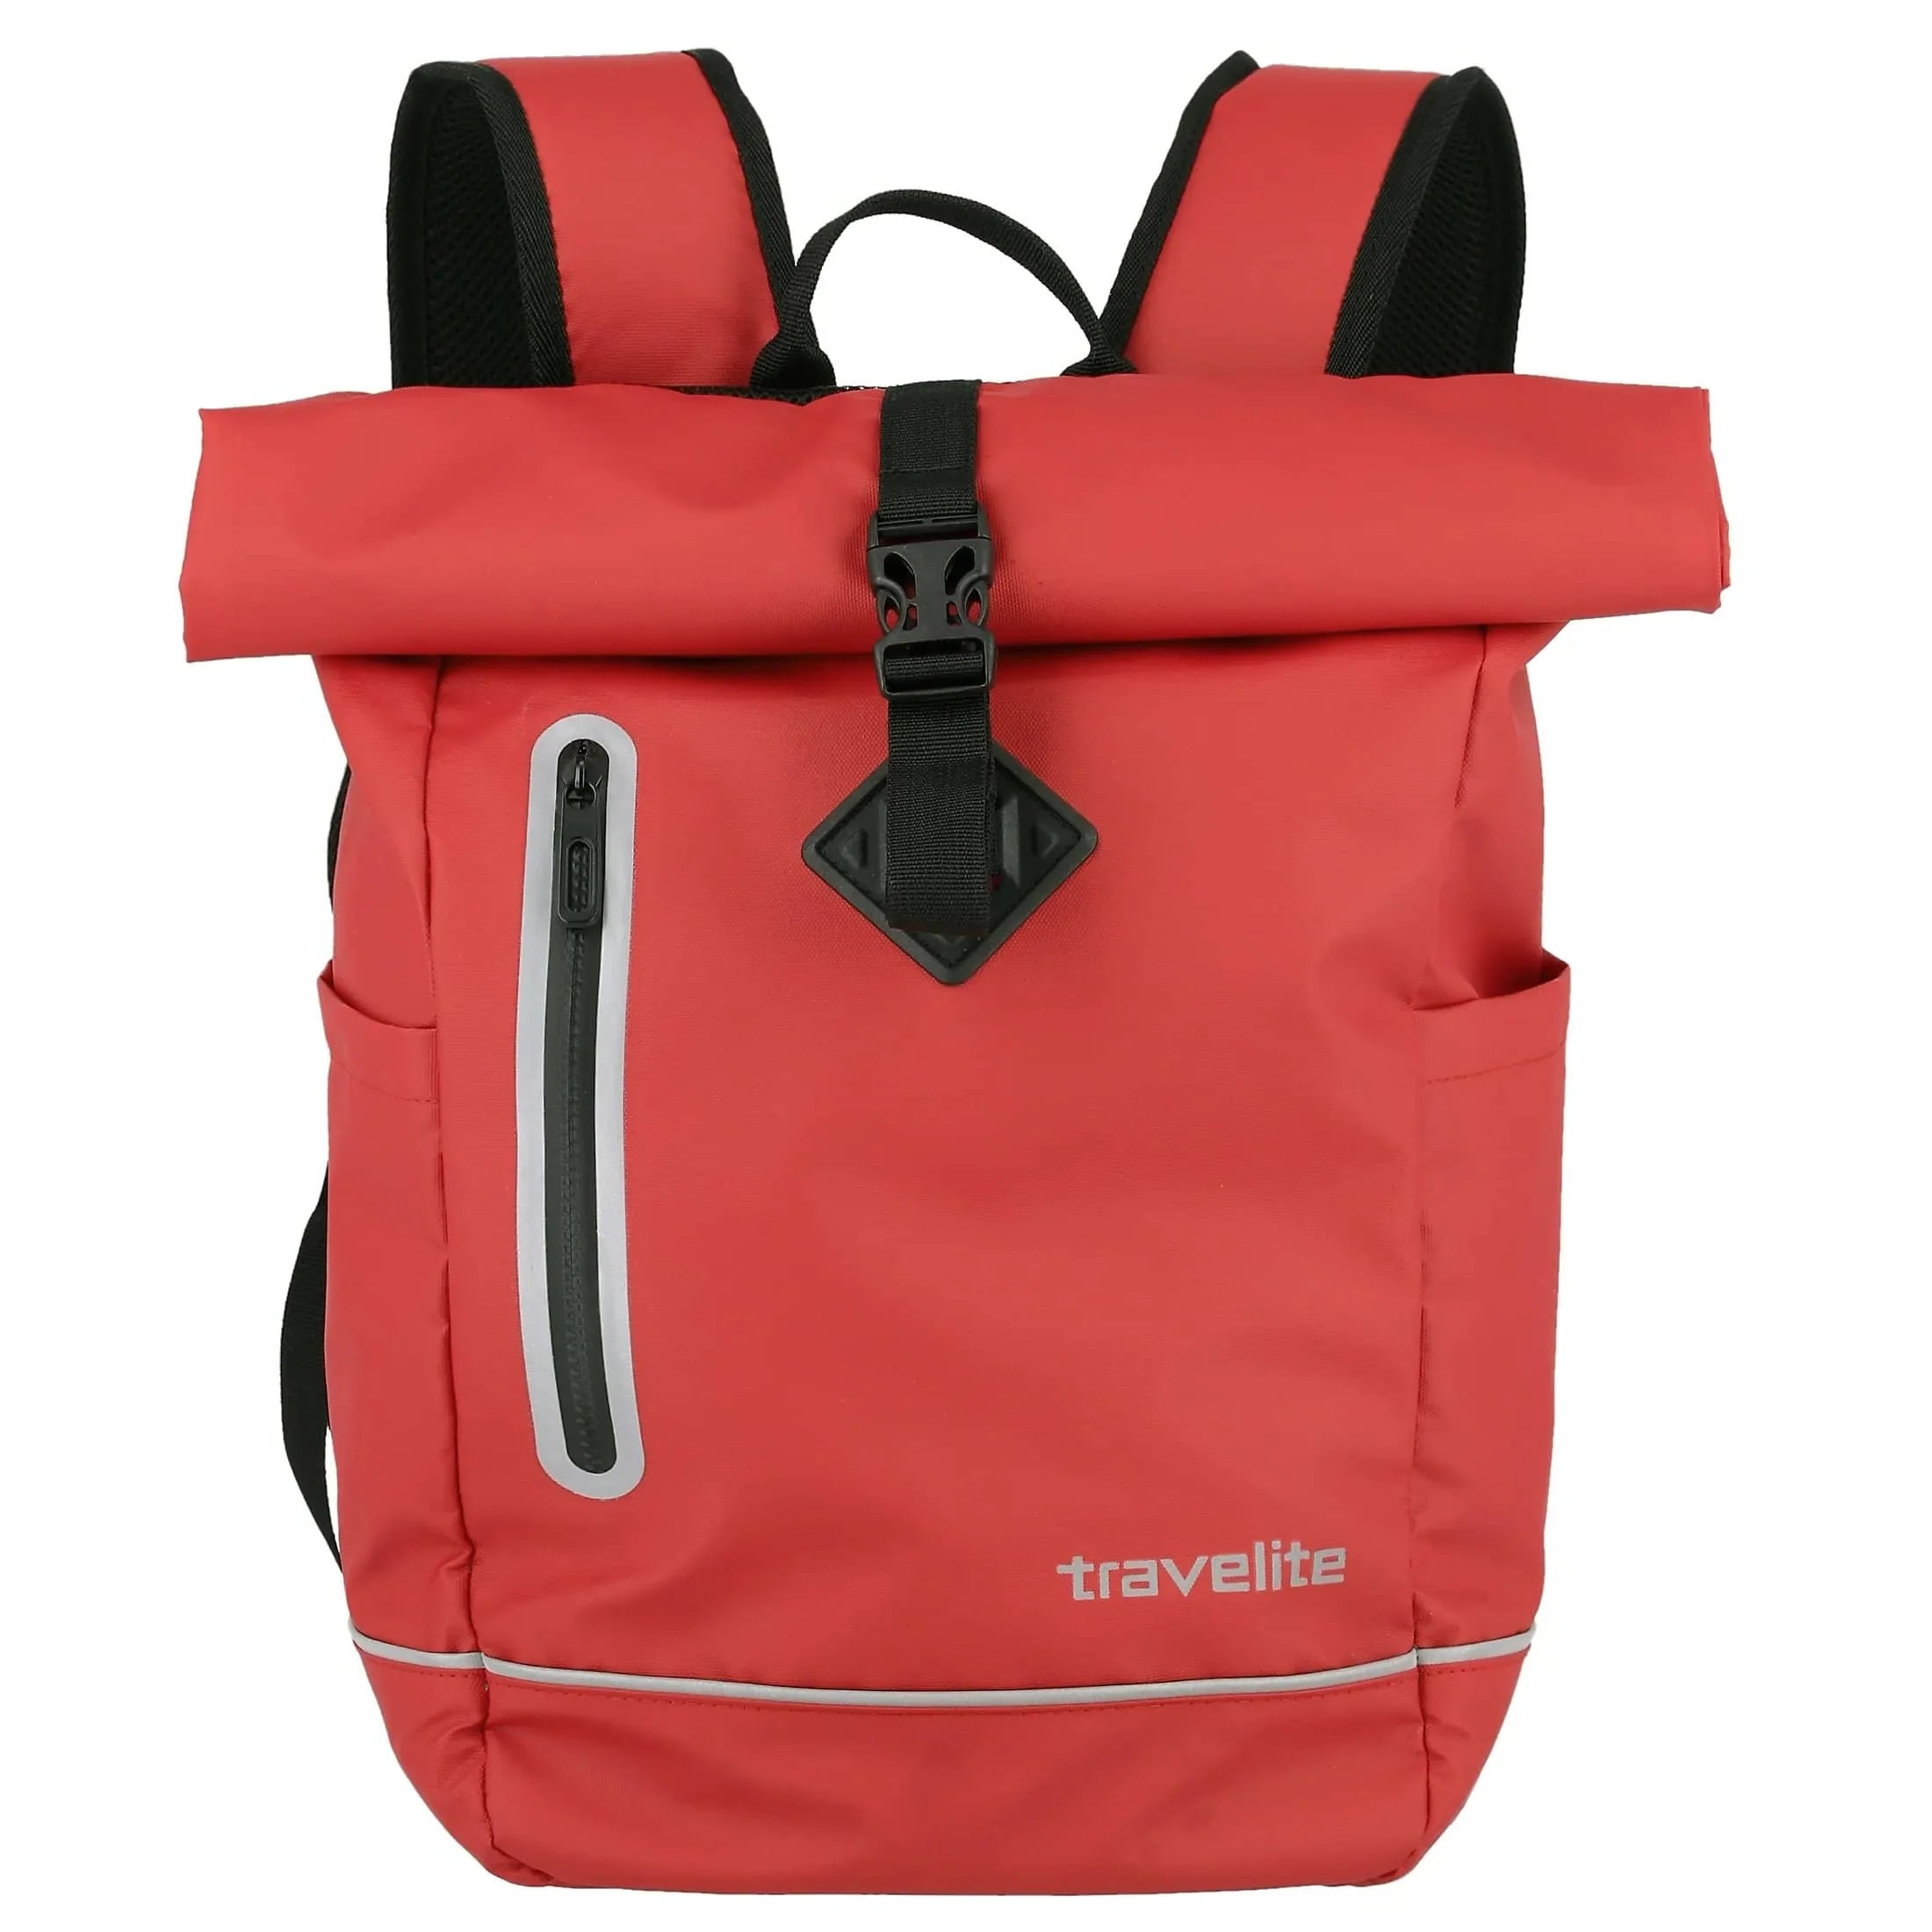 Travelite Basics Roll-Up Backpack Tarpaulin 48 cm - Yellow